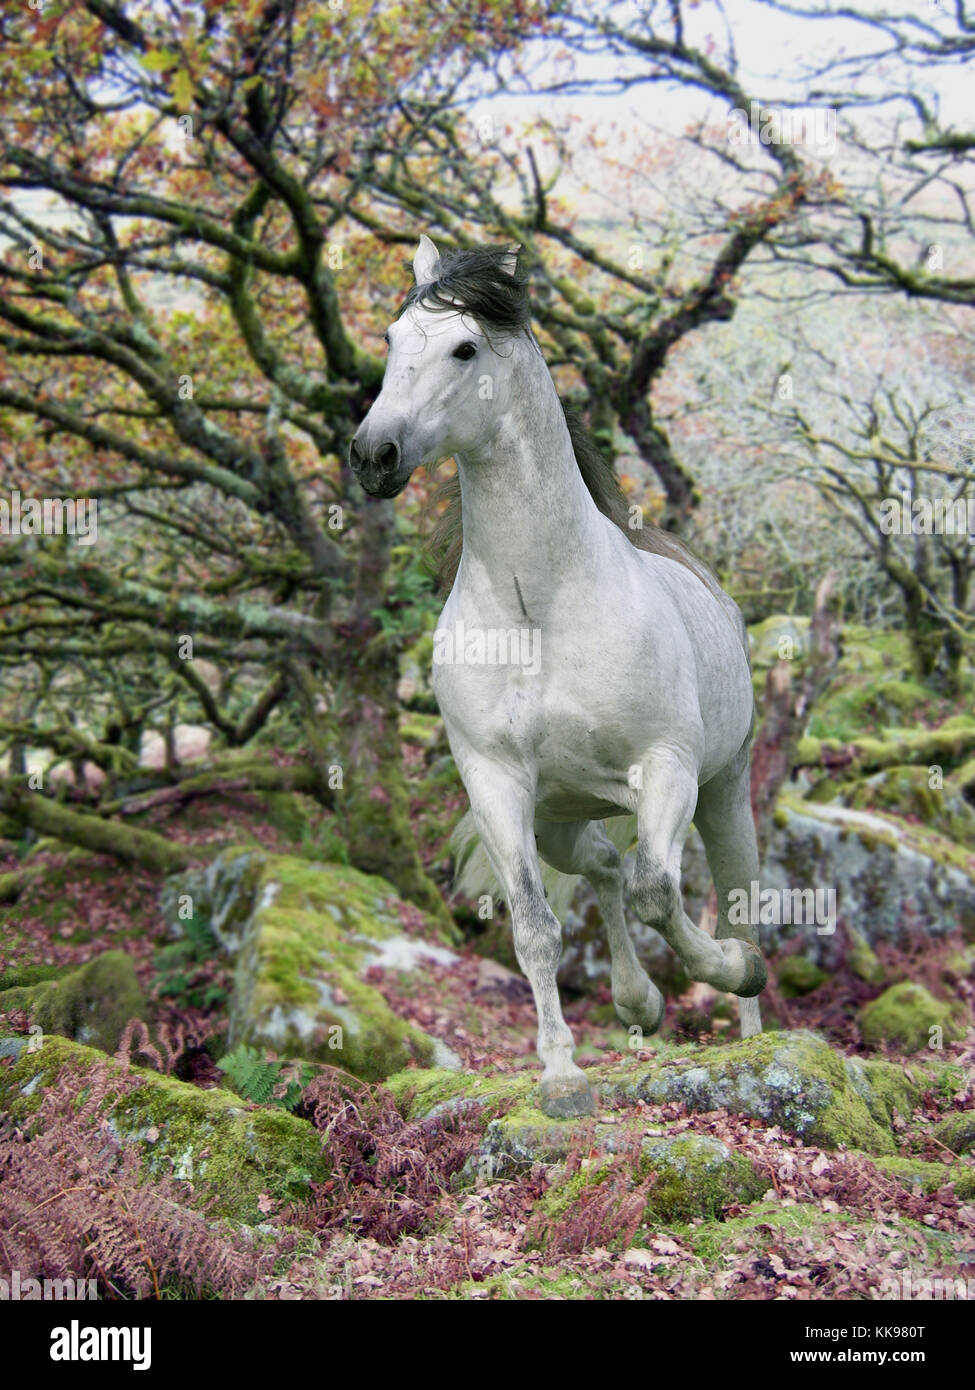 A grey horse prancing through a magical woodland. Stock Photo